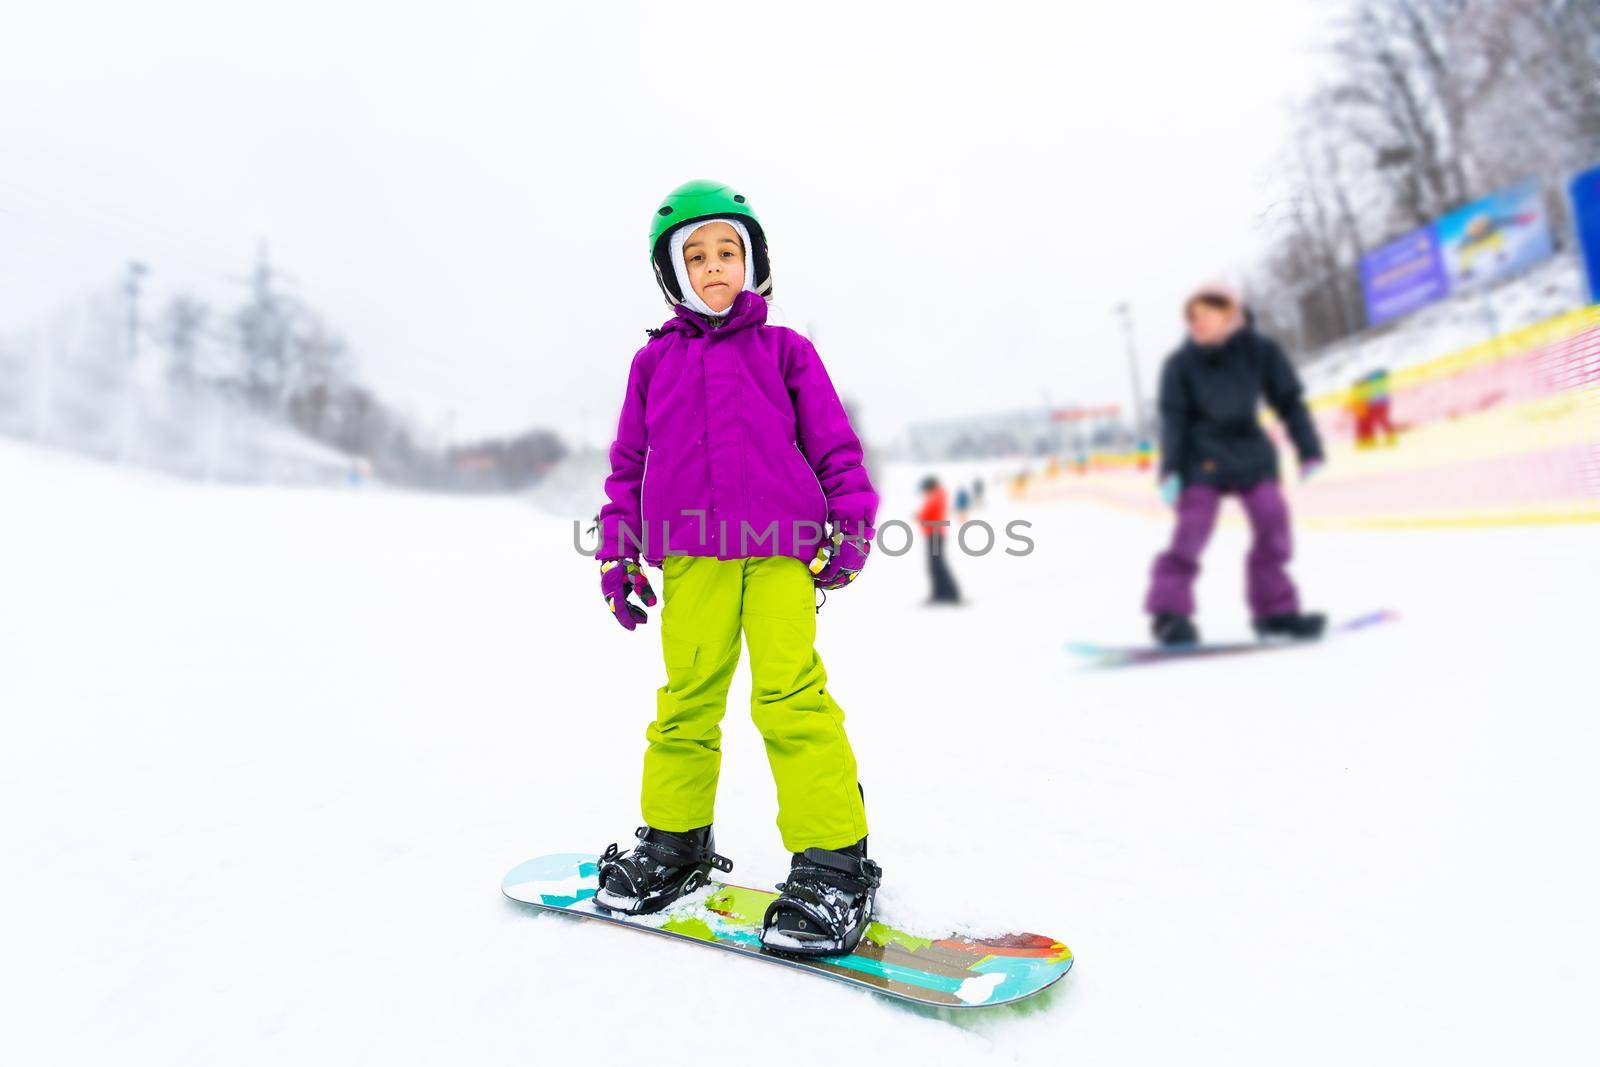 Snowboard Winter Sport. little girl learning to snowboard, wearing warm winter clothes. Winter background.